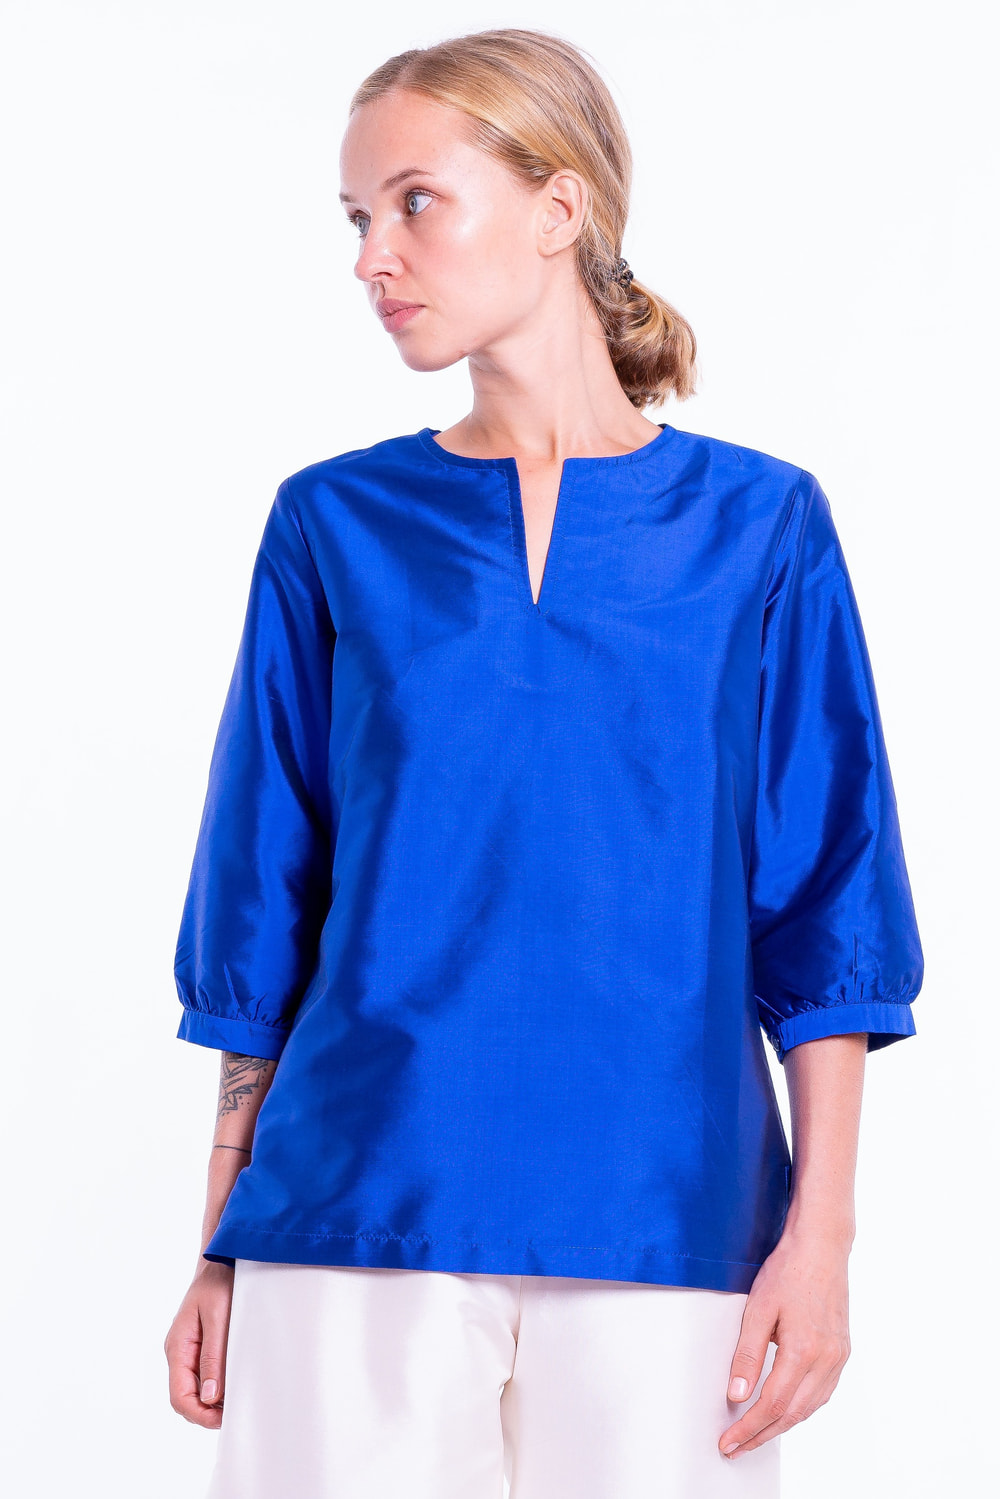 blue lazuli top in natural silk, three quarter length sleeves, tunisien neckline